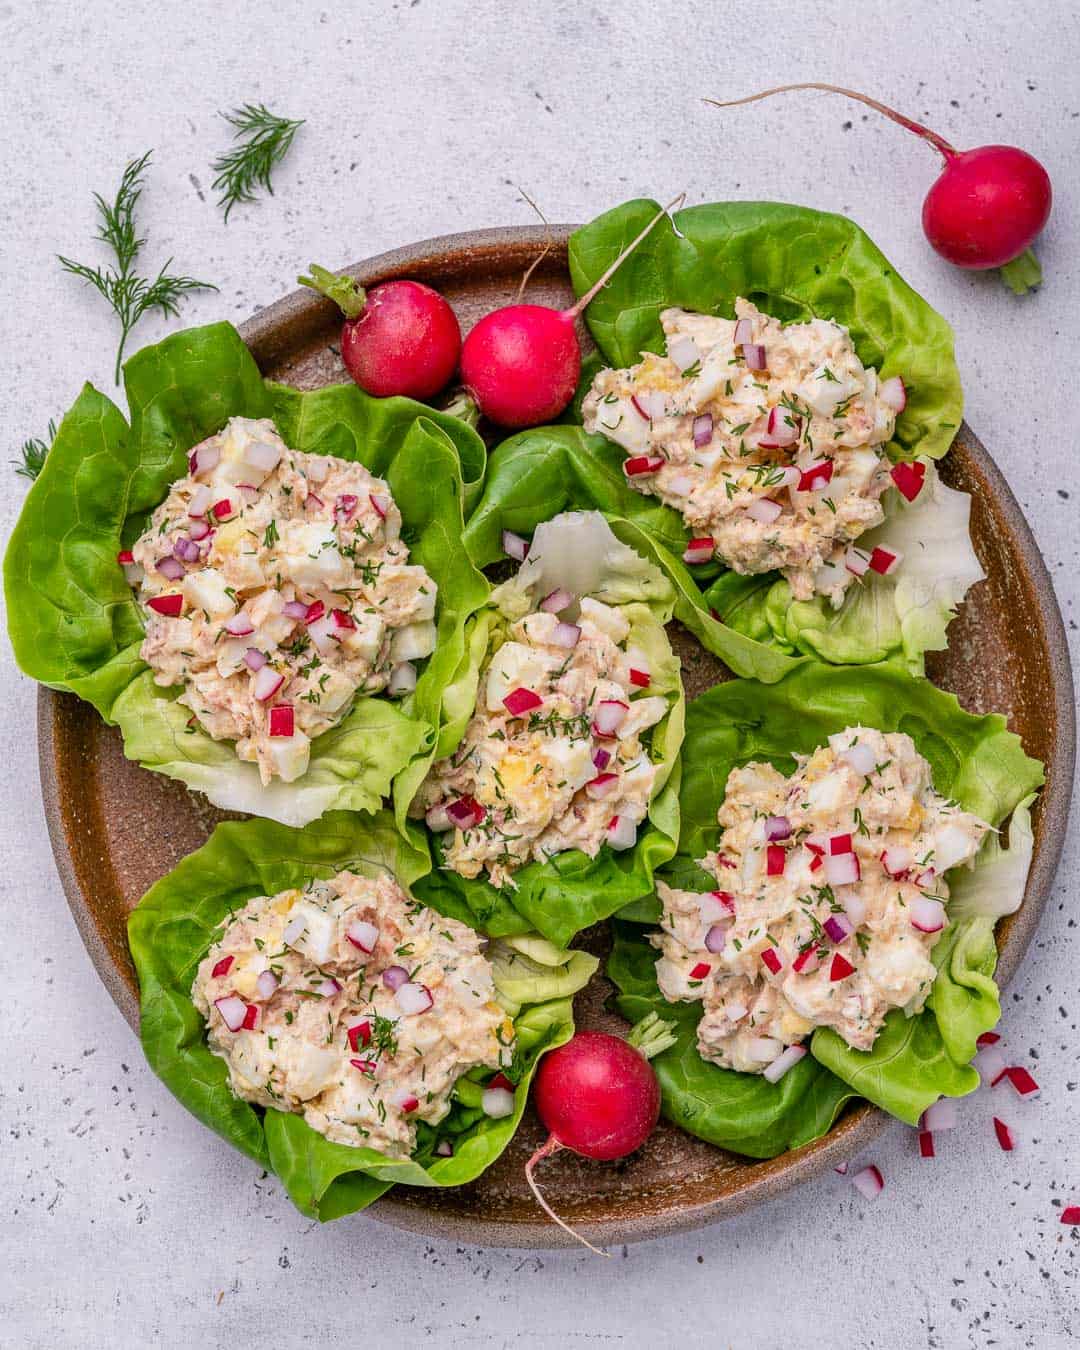 healthy tuna salad recipe